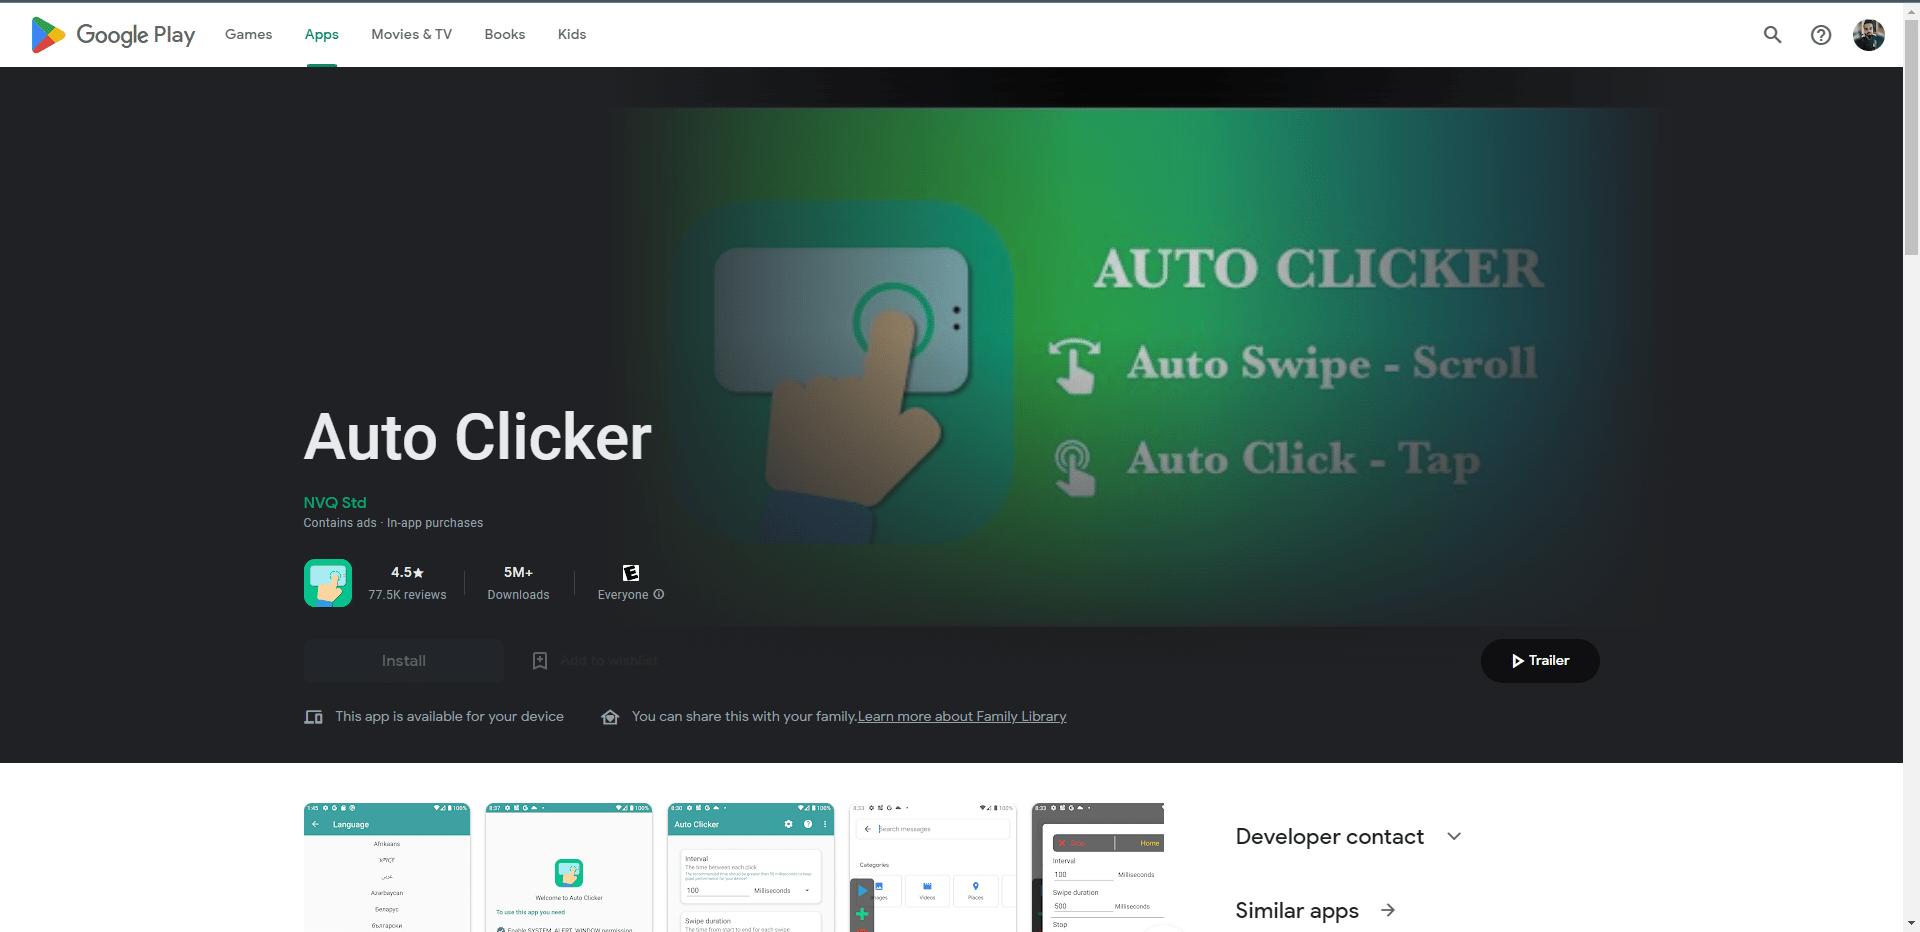 Auto Clicker NVQ Std Play Store webpage